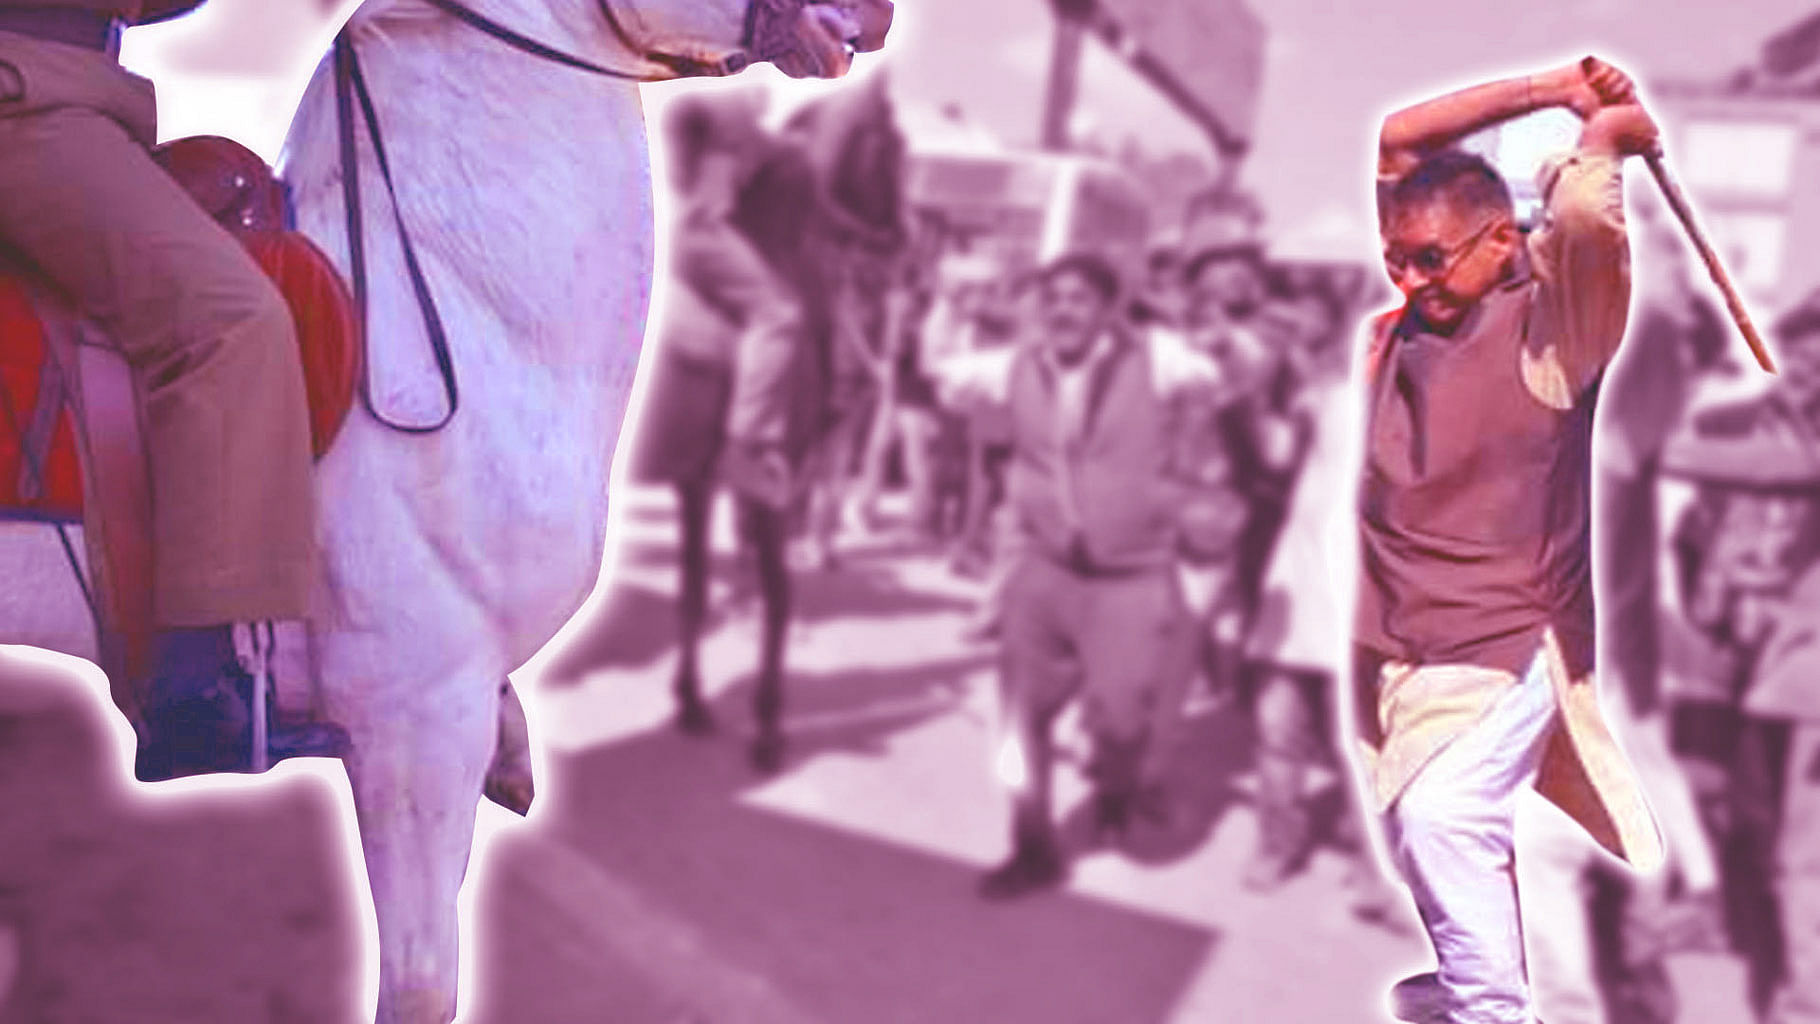 BJP MLA Ganesh Joshi raising a stick on police horse, Shaktiman (Photo: ANI, altered by The Quint)